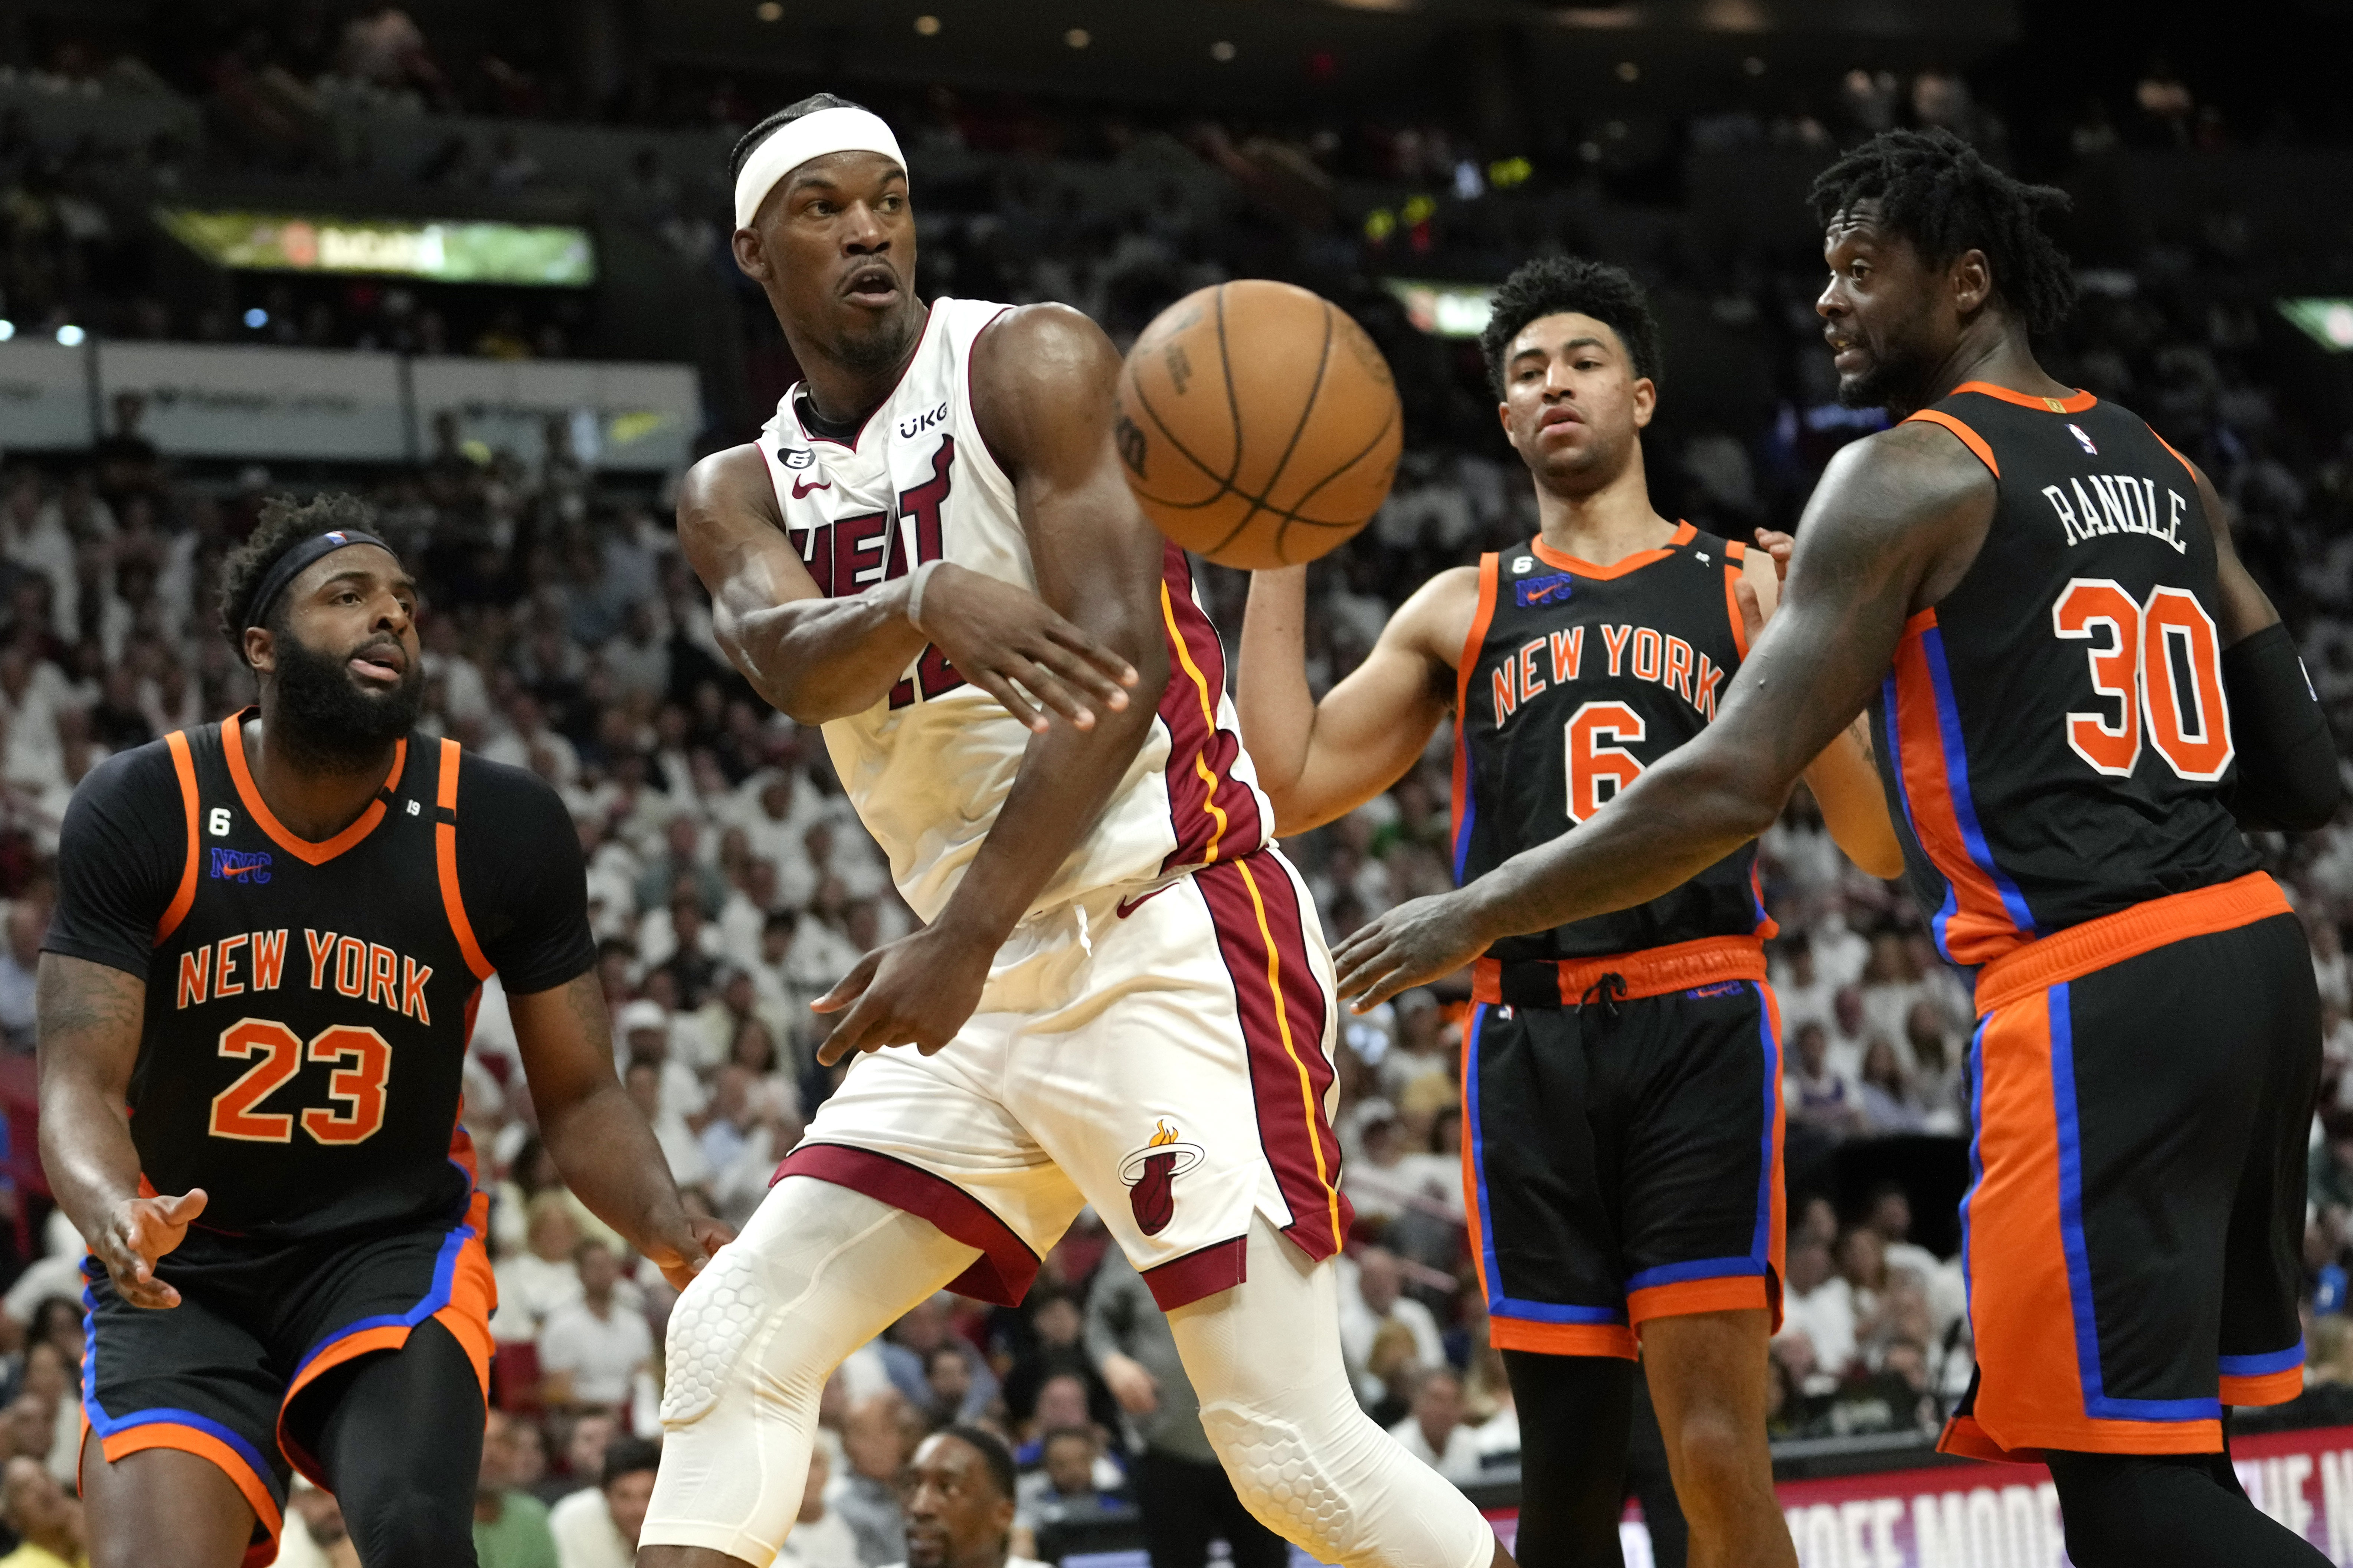 Heat best Knicks, enter NBA Eastern Conference finals